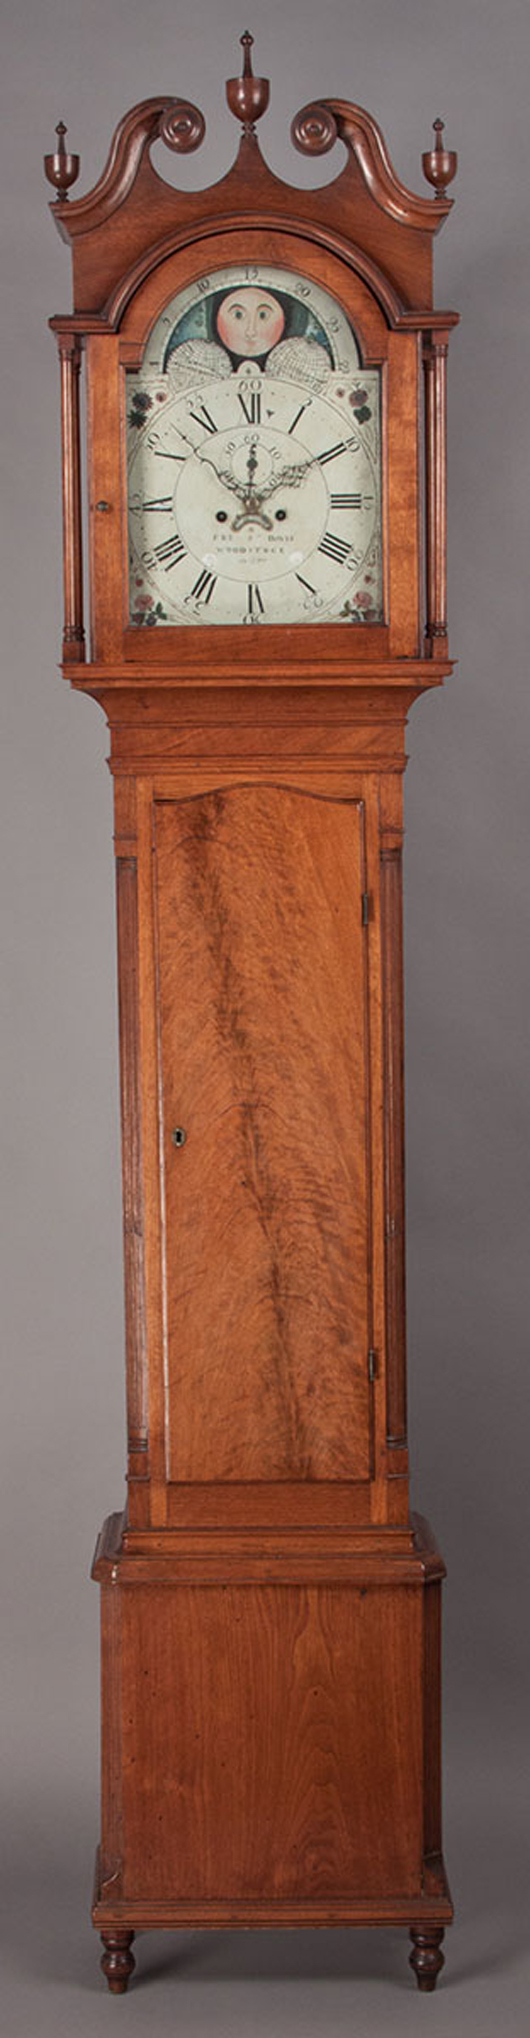 Shenandoah Valley tall-case clock by Jacob Fry & Caleb Davis, circa 1800, Woodstock, Va., $92,000. Jeffrey S. Evans image.